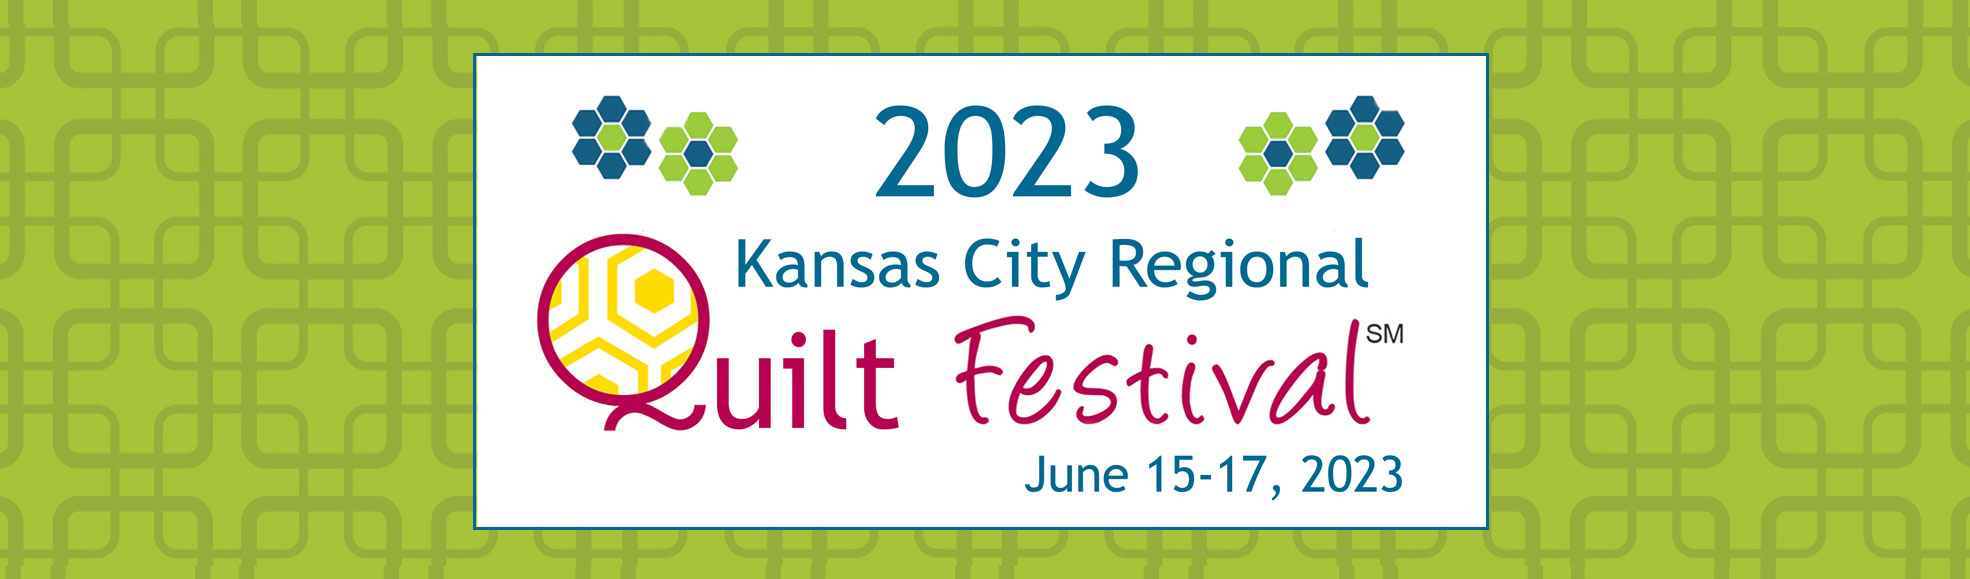 Kansas City Regional Quilt Festival